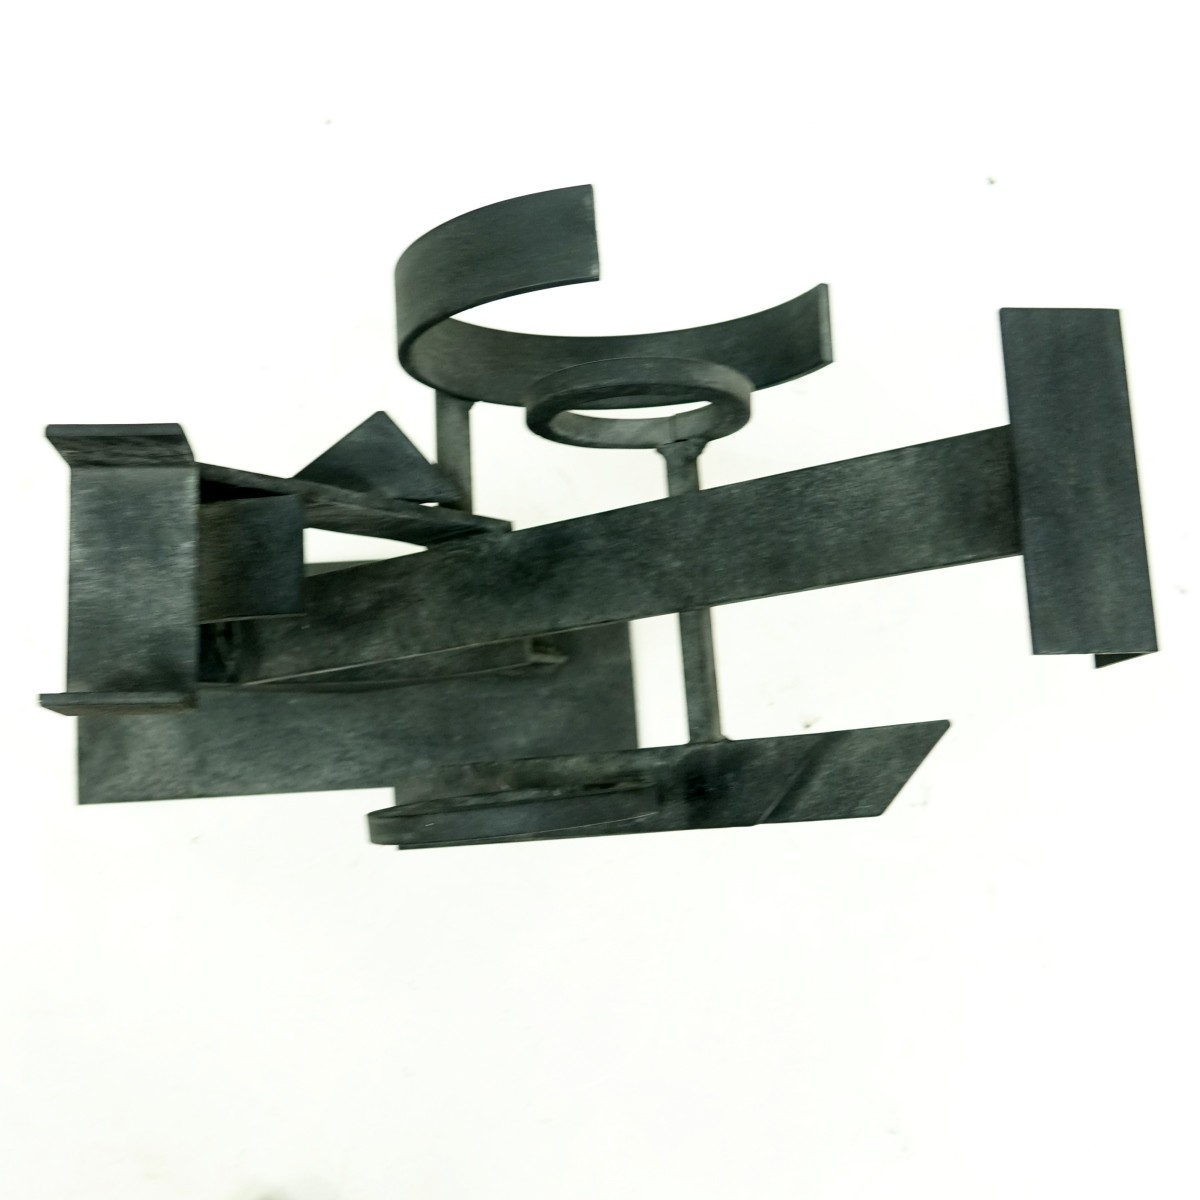 Garcia "Eros" Ironwork Abstract Sculpture